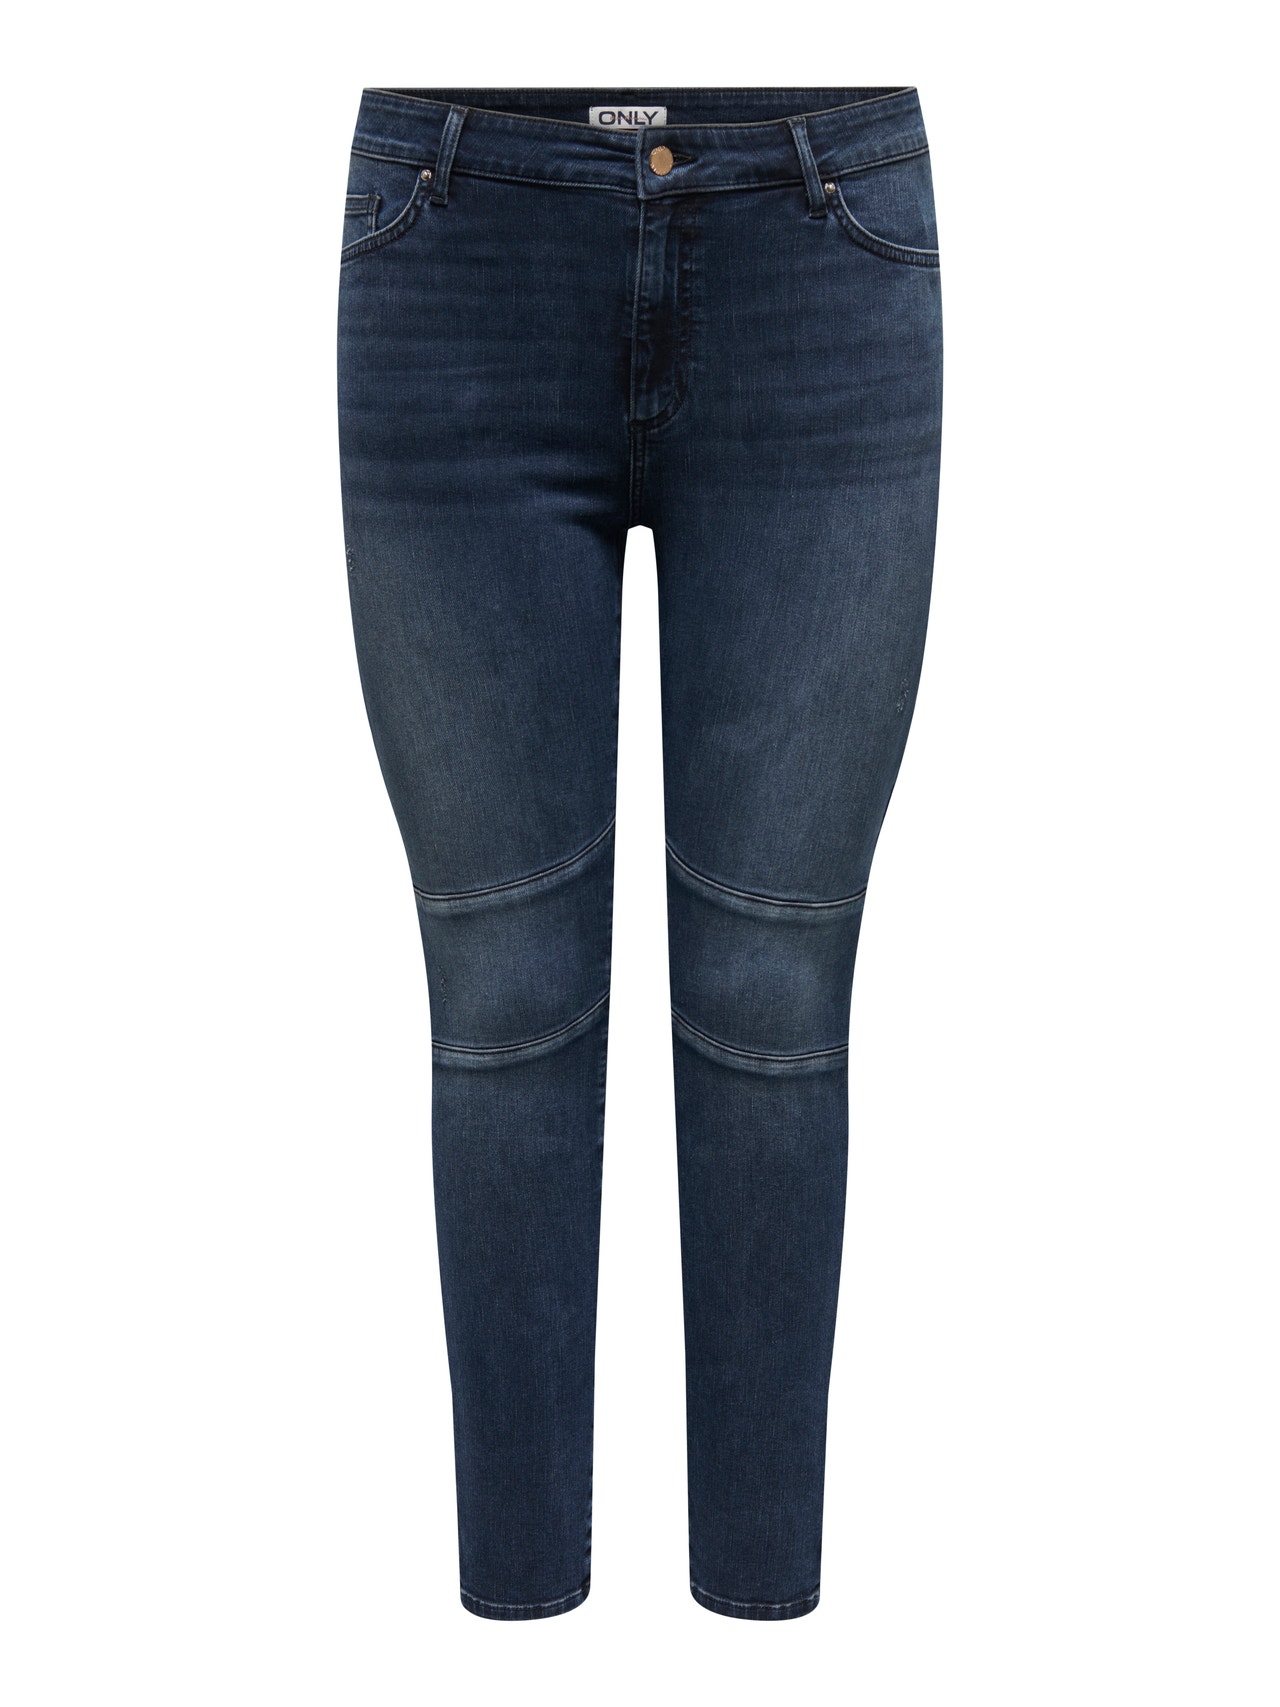 ONLY Jeans Skinny Fit Taille classique -Blue Black Denim - 15266401